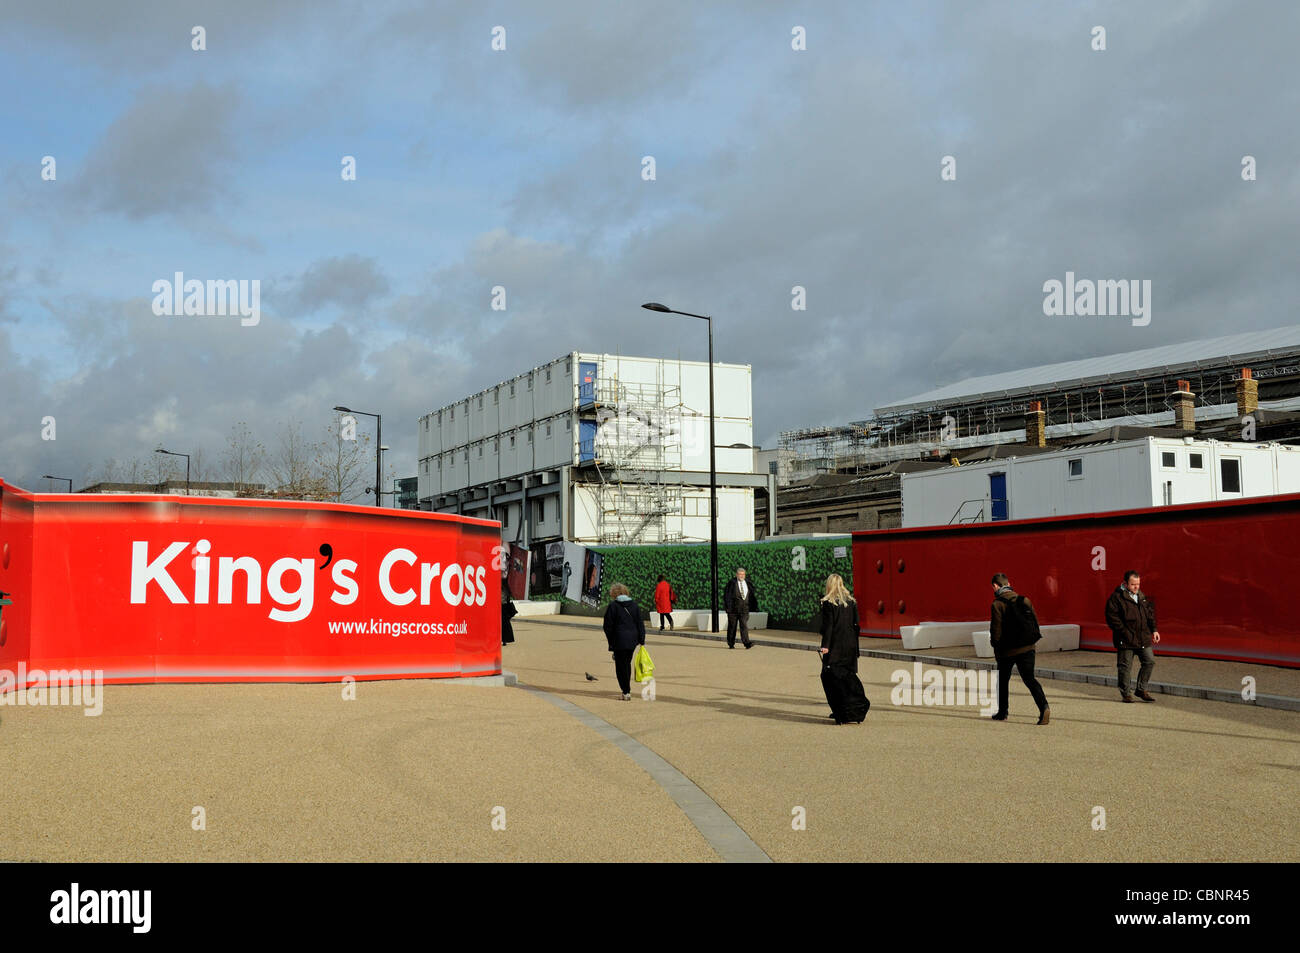 Kings Cross aufgedruckten roten Werbetafeln, Kings Cross zentrale Entwicklung vor Ort, Ecke des Königs Boulevard mit Passanten Stockfoto